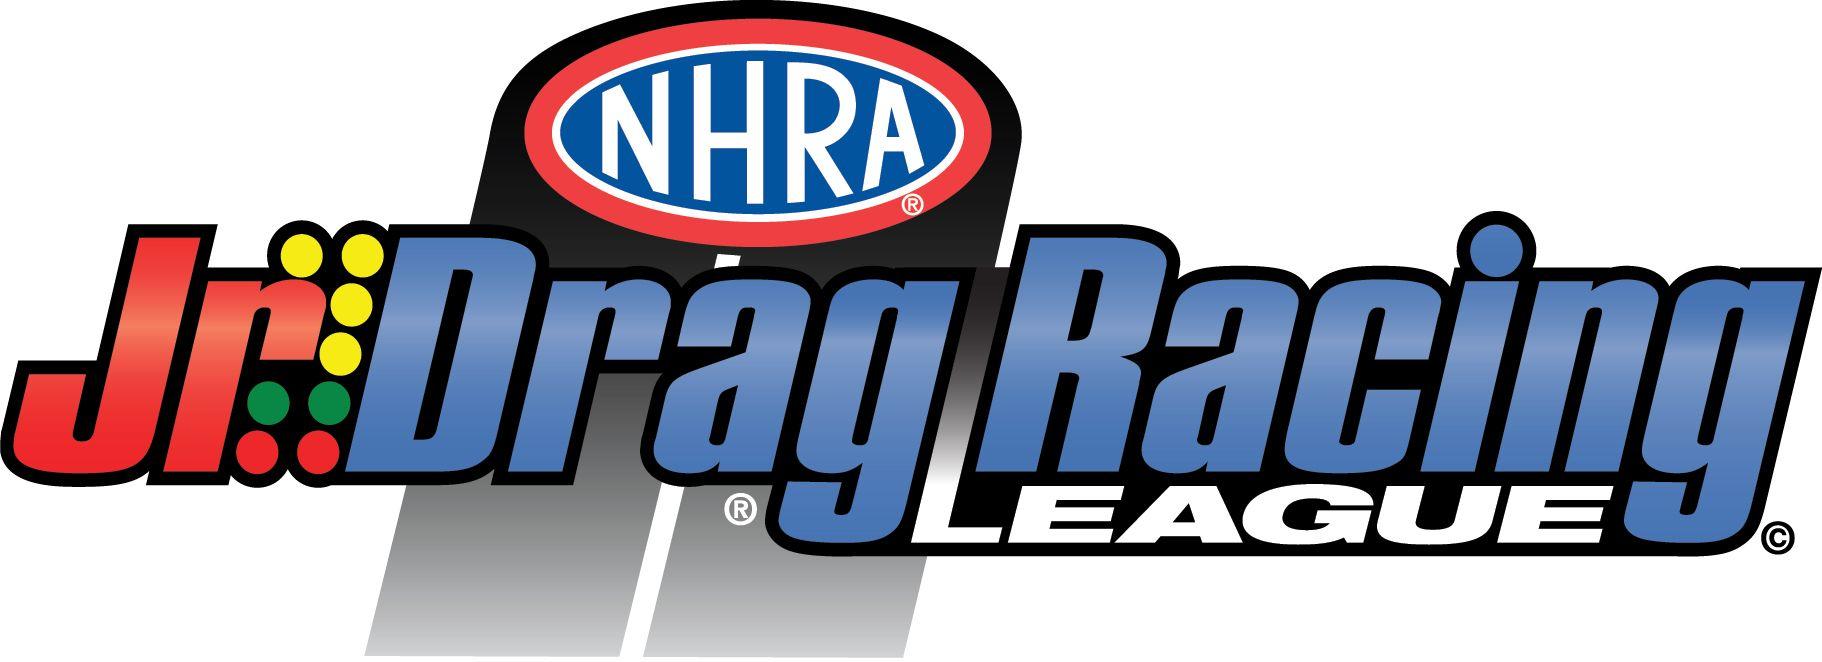 NHRA Drag Racing Logo - dragraceresults Information | Drag Race Results